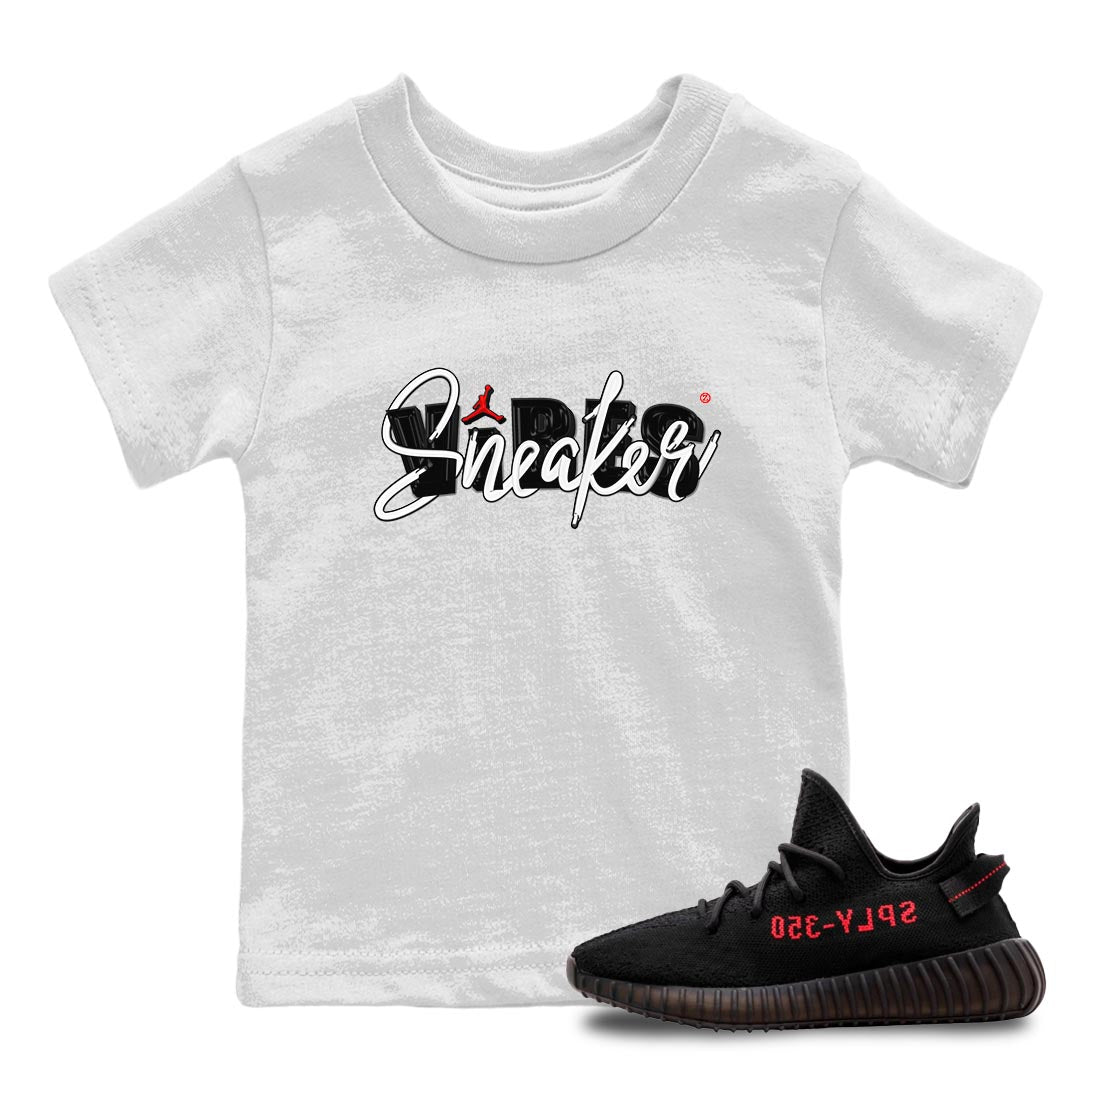 Yeezy 350 Bred shirt to match jordans Sneaker Vibes Streetwear Sneaker Shirt Yeezy Boost 350 V2 Bred Drip Gear Zone Sneaker Matching Clothing Baby Toddler White 1 T-Shirt